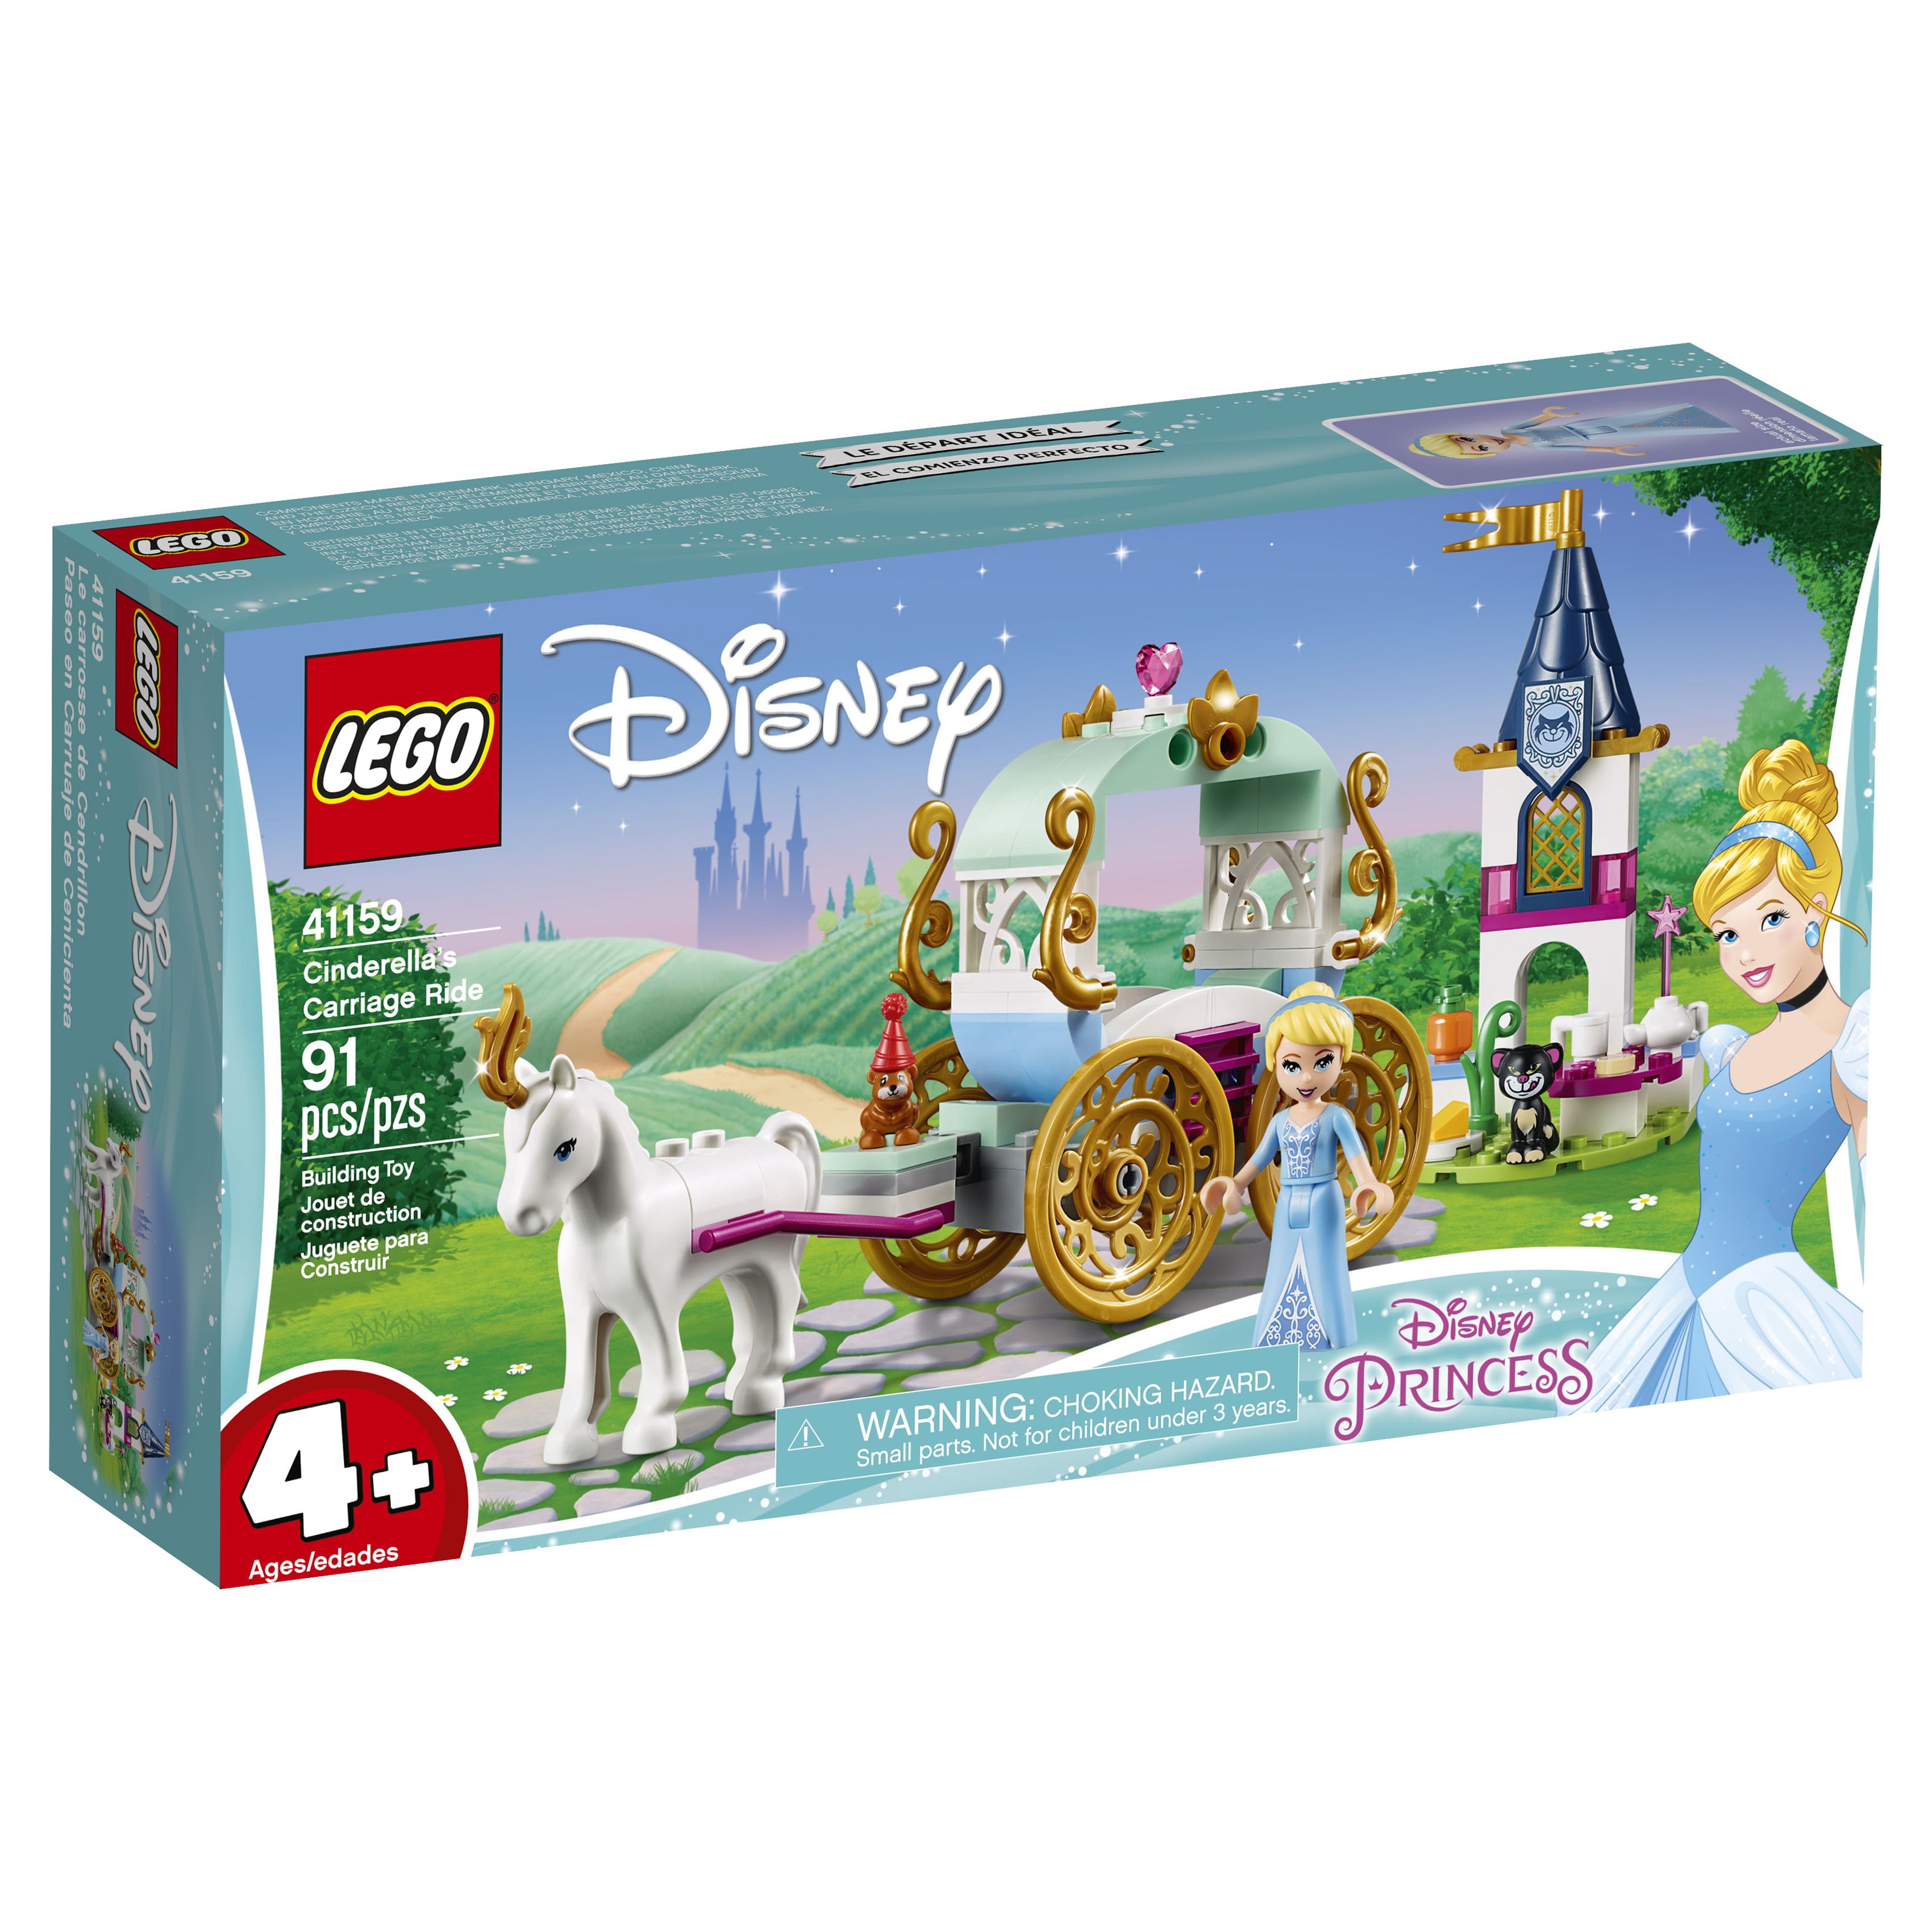 LEGO Disney Princess Cinderella's Carriage Ride Toy 41159 - image 5 of 8